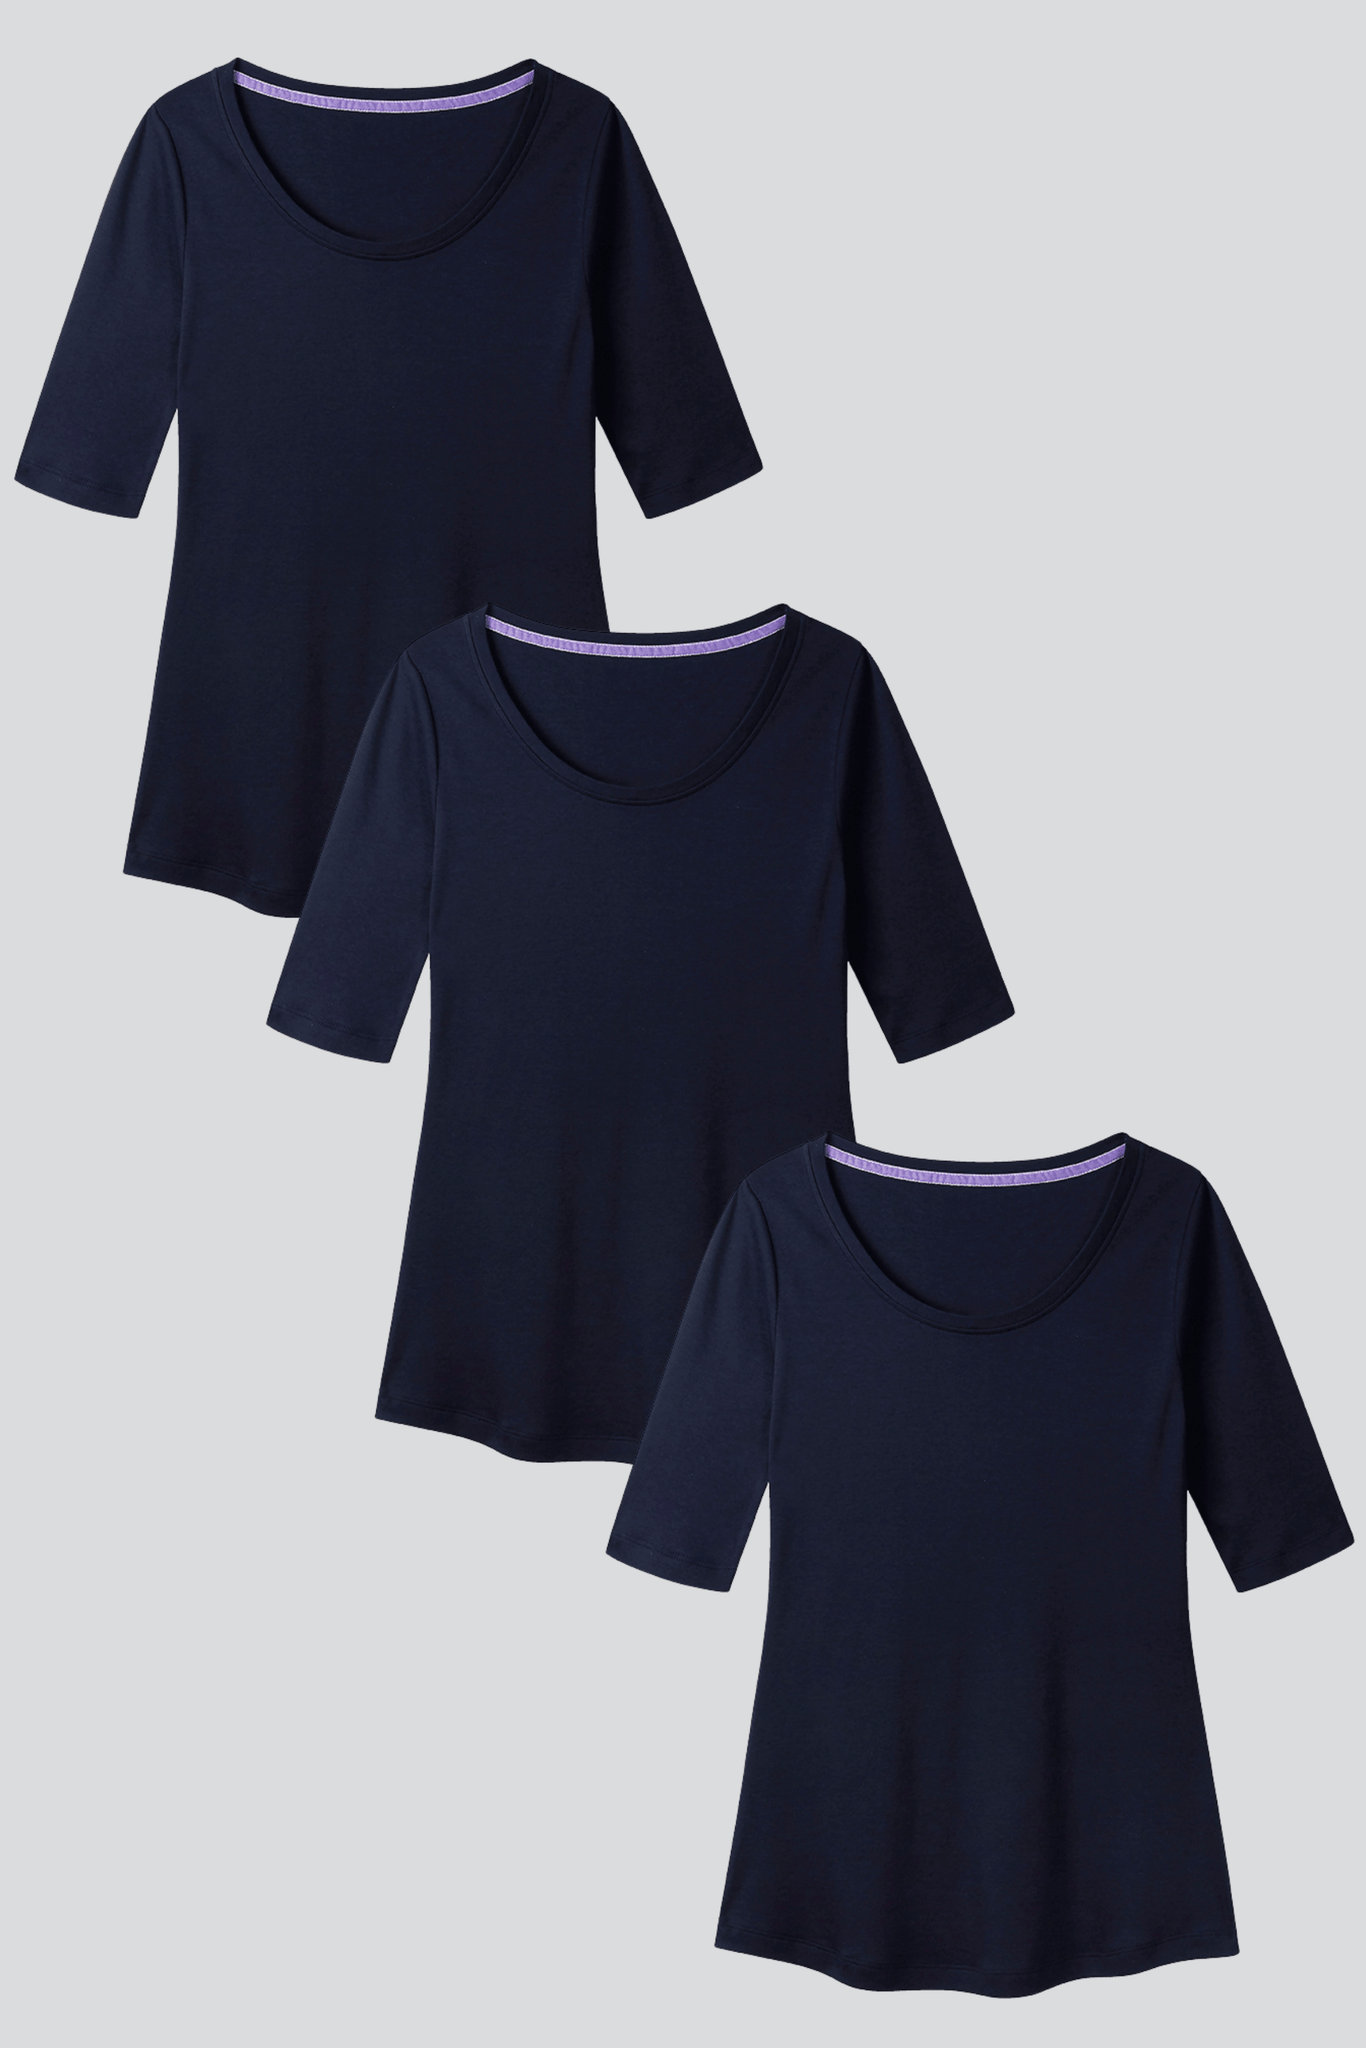 | lavender Hill t-shirt Lavender Clothing neck scoop Ladies luxury